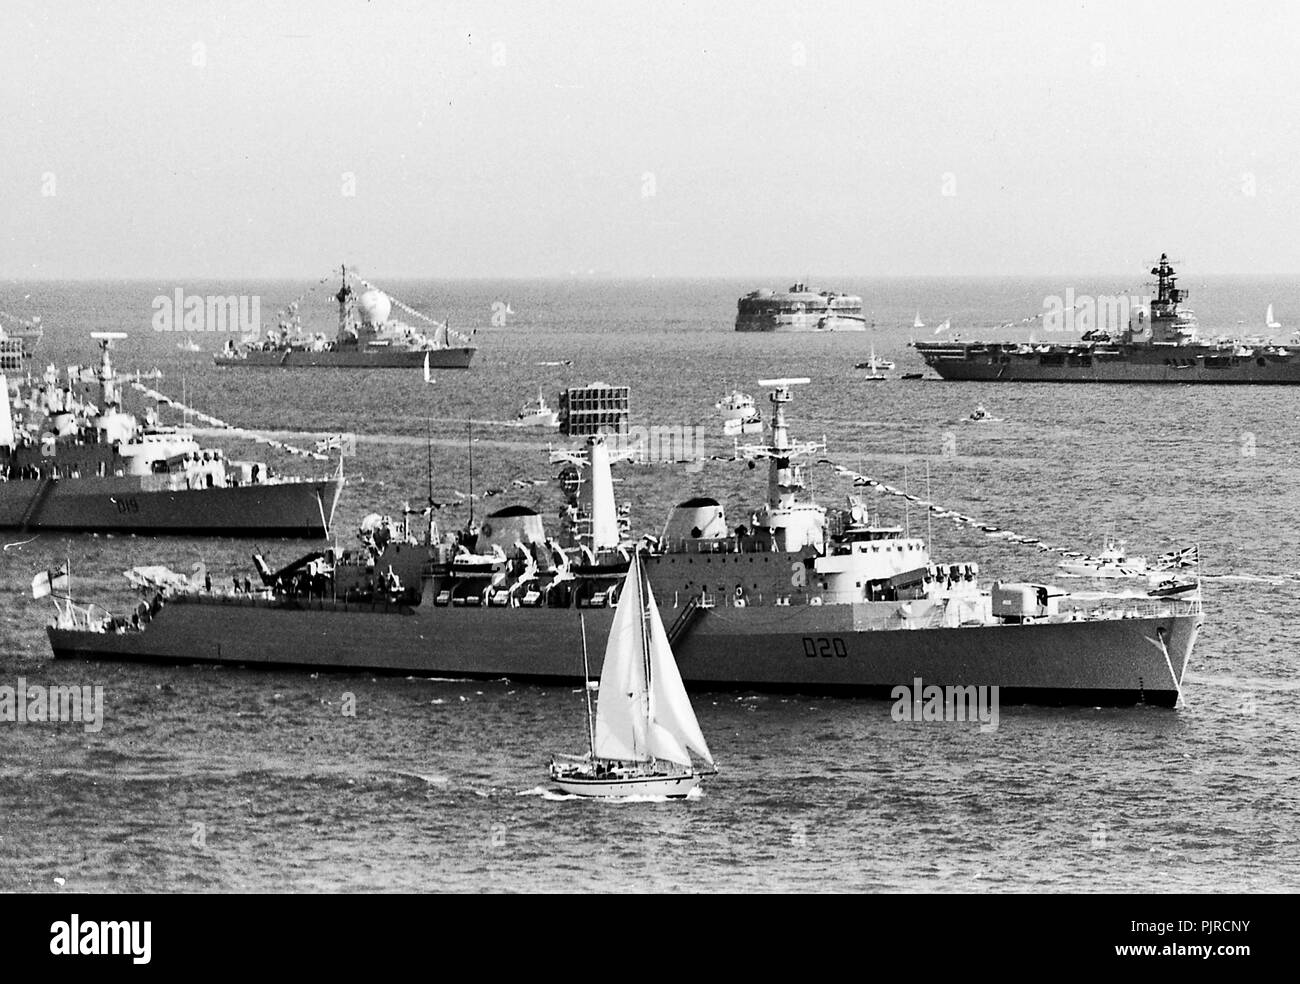 AJAXNETPHOTO. 26. Juni, 1977. SPITHEAD, England. (PMO 1) - SILVER JUBILEE FLOTTE REVIEW - GRAFSCHAFT Klasse Zerstörer HMS FIFE (FORE) und HMS Glamorgan (links) bei SPITHEAD für das Silberne Jubiläum Flotte überprüfen. Foto: Jonathan Eastland/AJAX REF: 7726061 Stockfoto